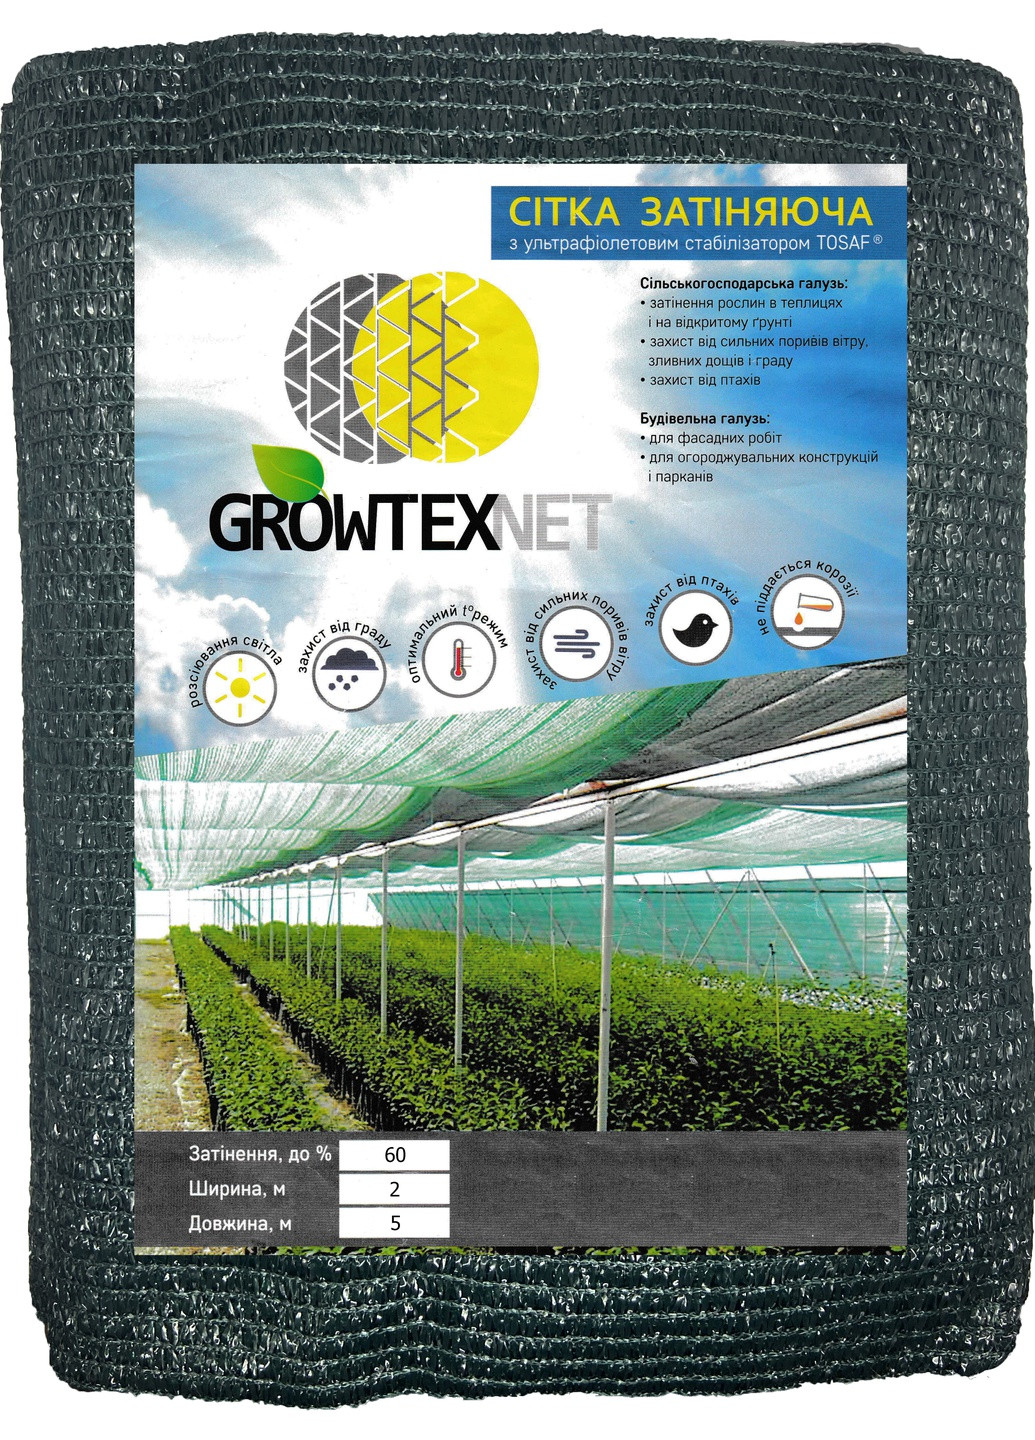 Сетка затеняющая Growtex Net с ультрафиолетовым стабилизатором 60% (55 гр/м2) размер 2х5 м Одетекс (258457575)